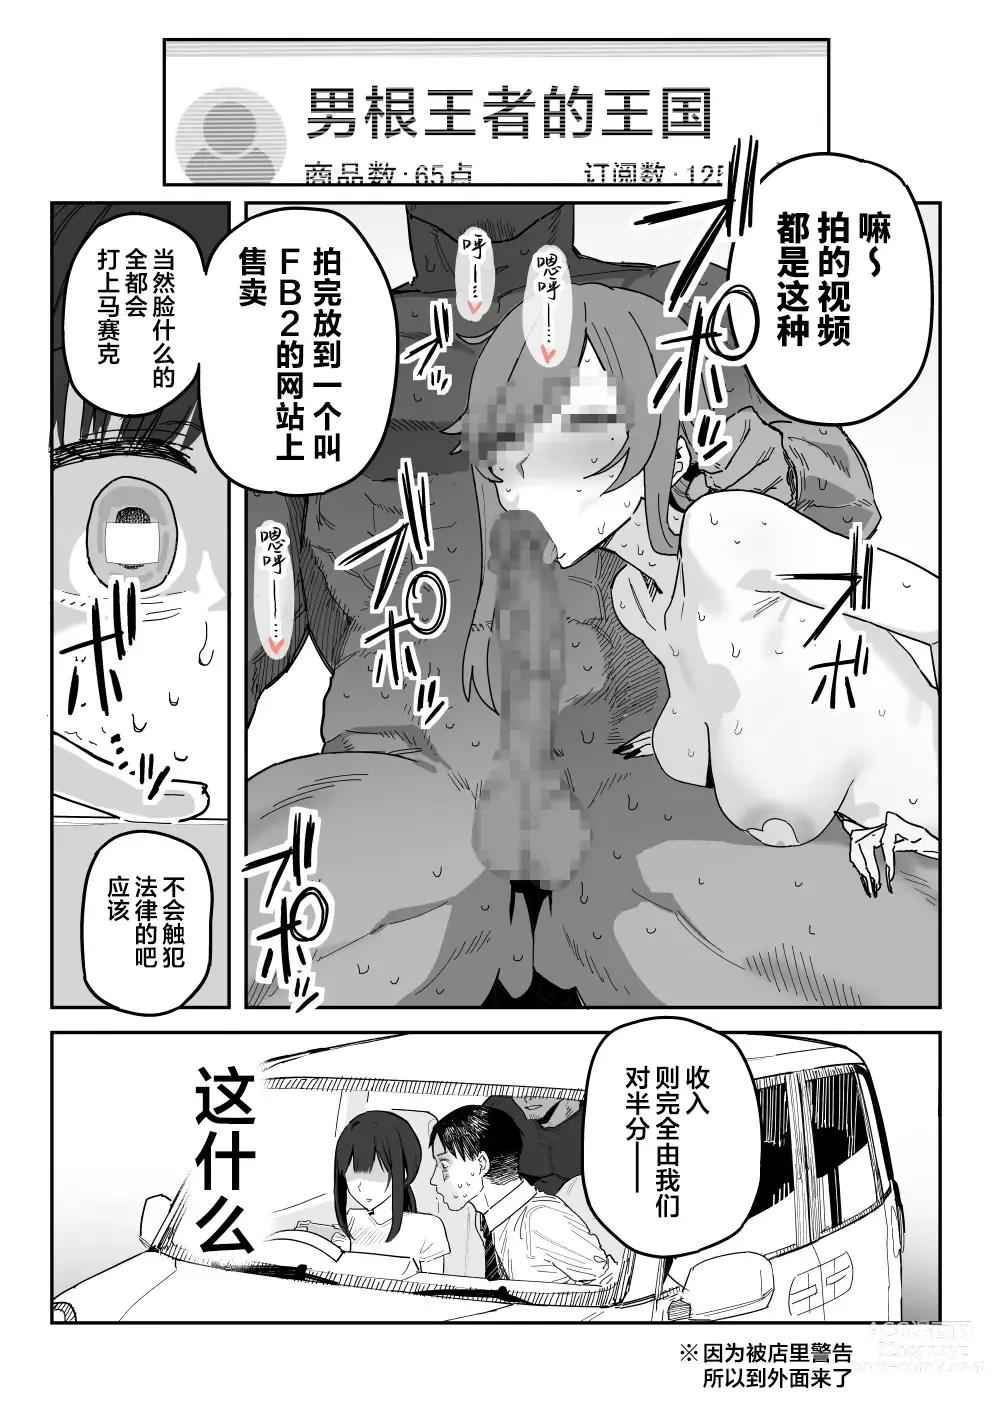 Page 8 of doujinshi 种崎佳织(39岁)代替女儿同人AV出道